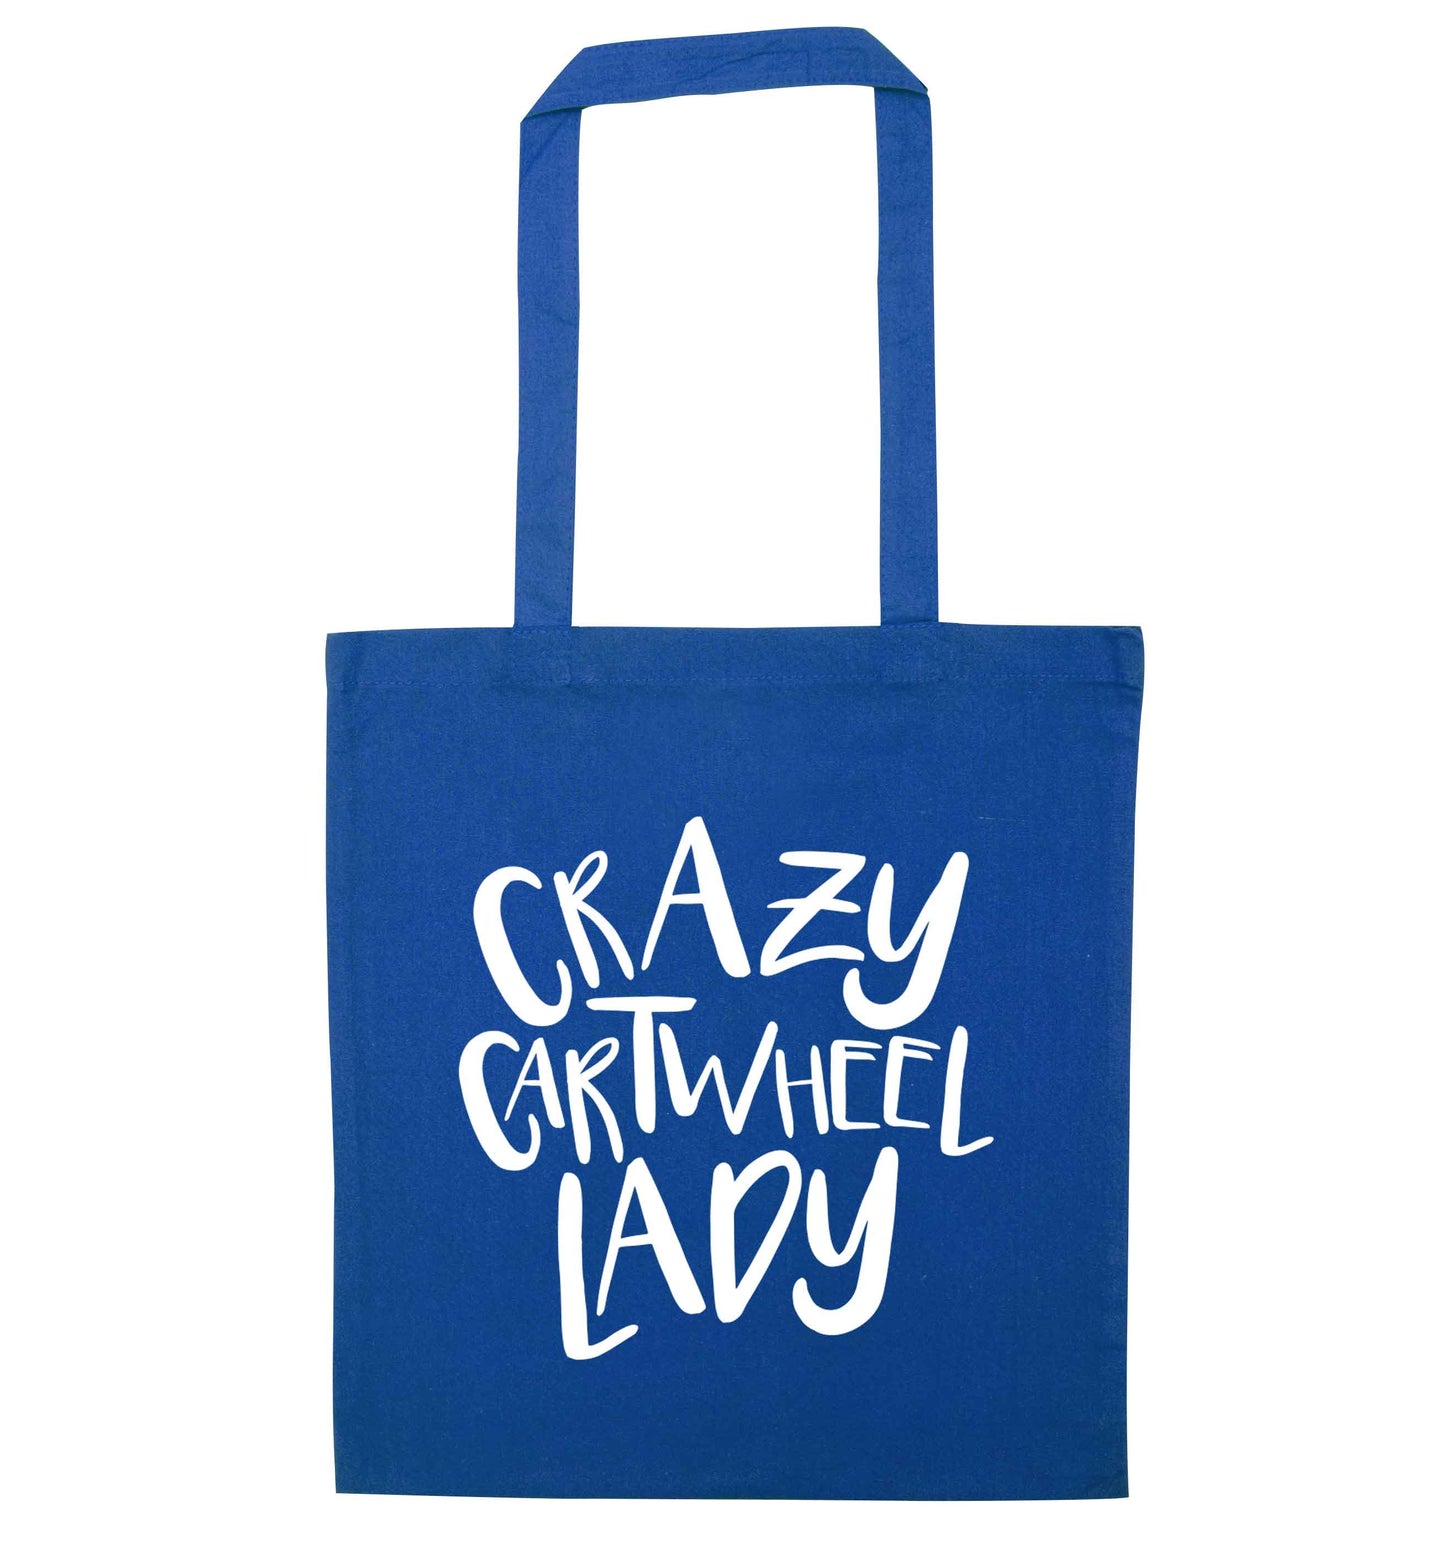 Crazy cartwheel lady blue tote bag